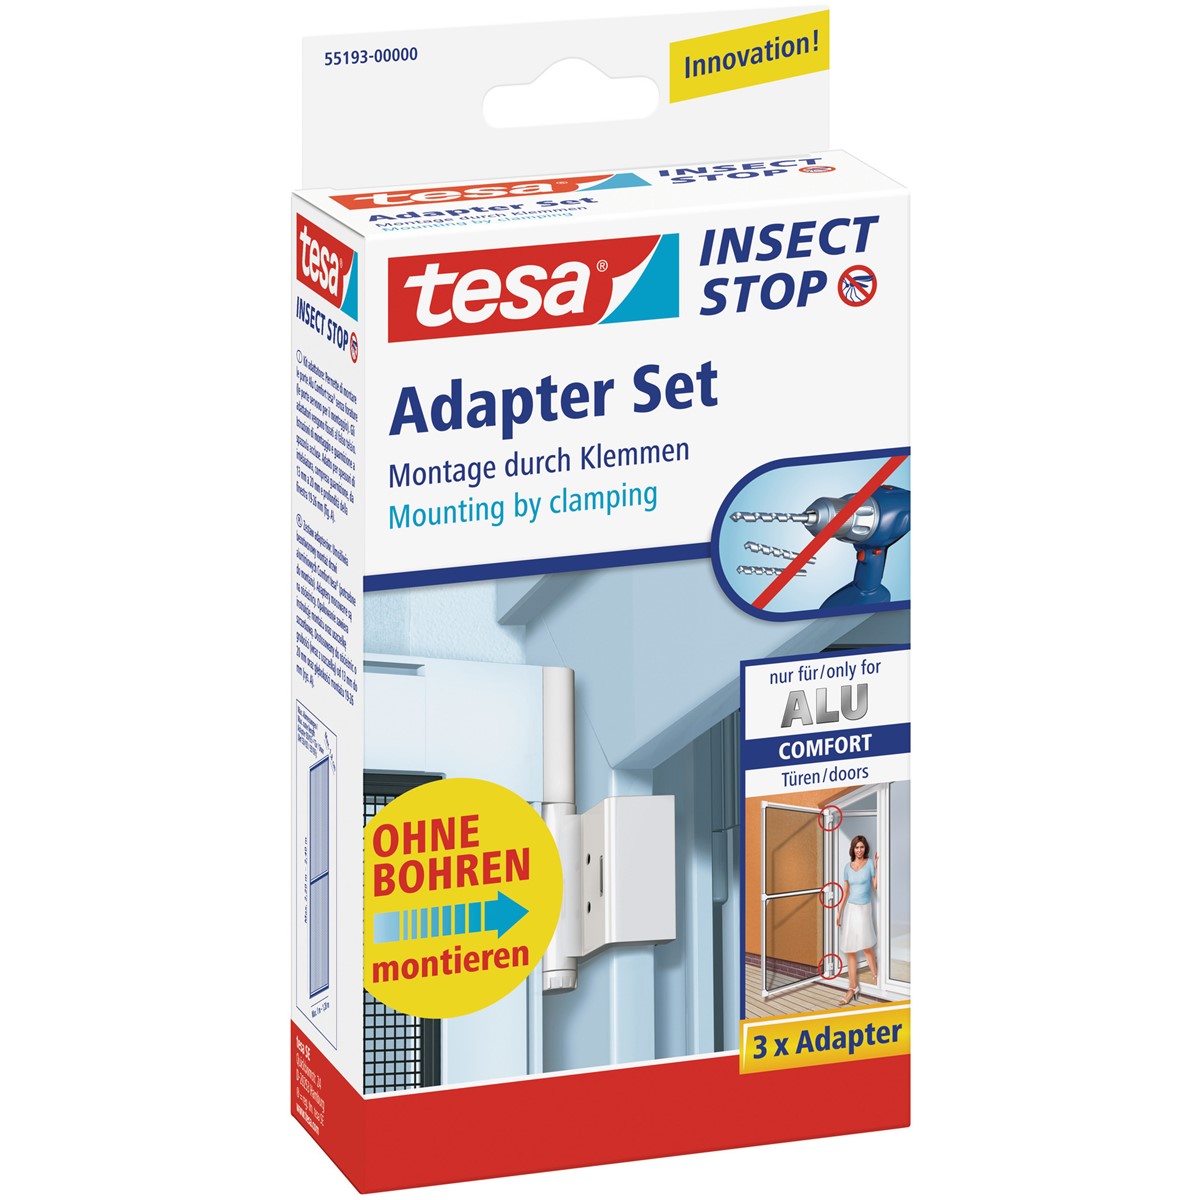 für Tür, tesa ALU weiß Adapter Insect - Stop 55193-00000 COMFORT